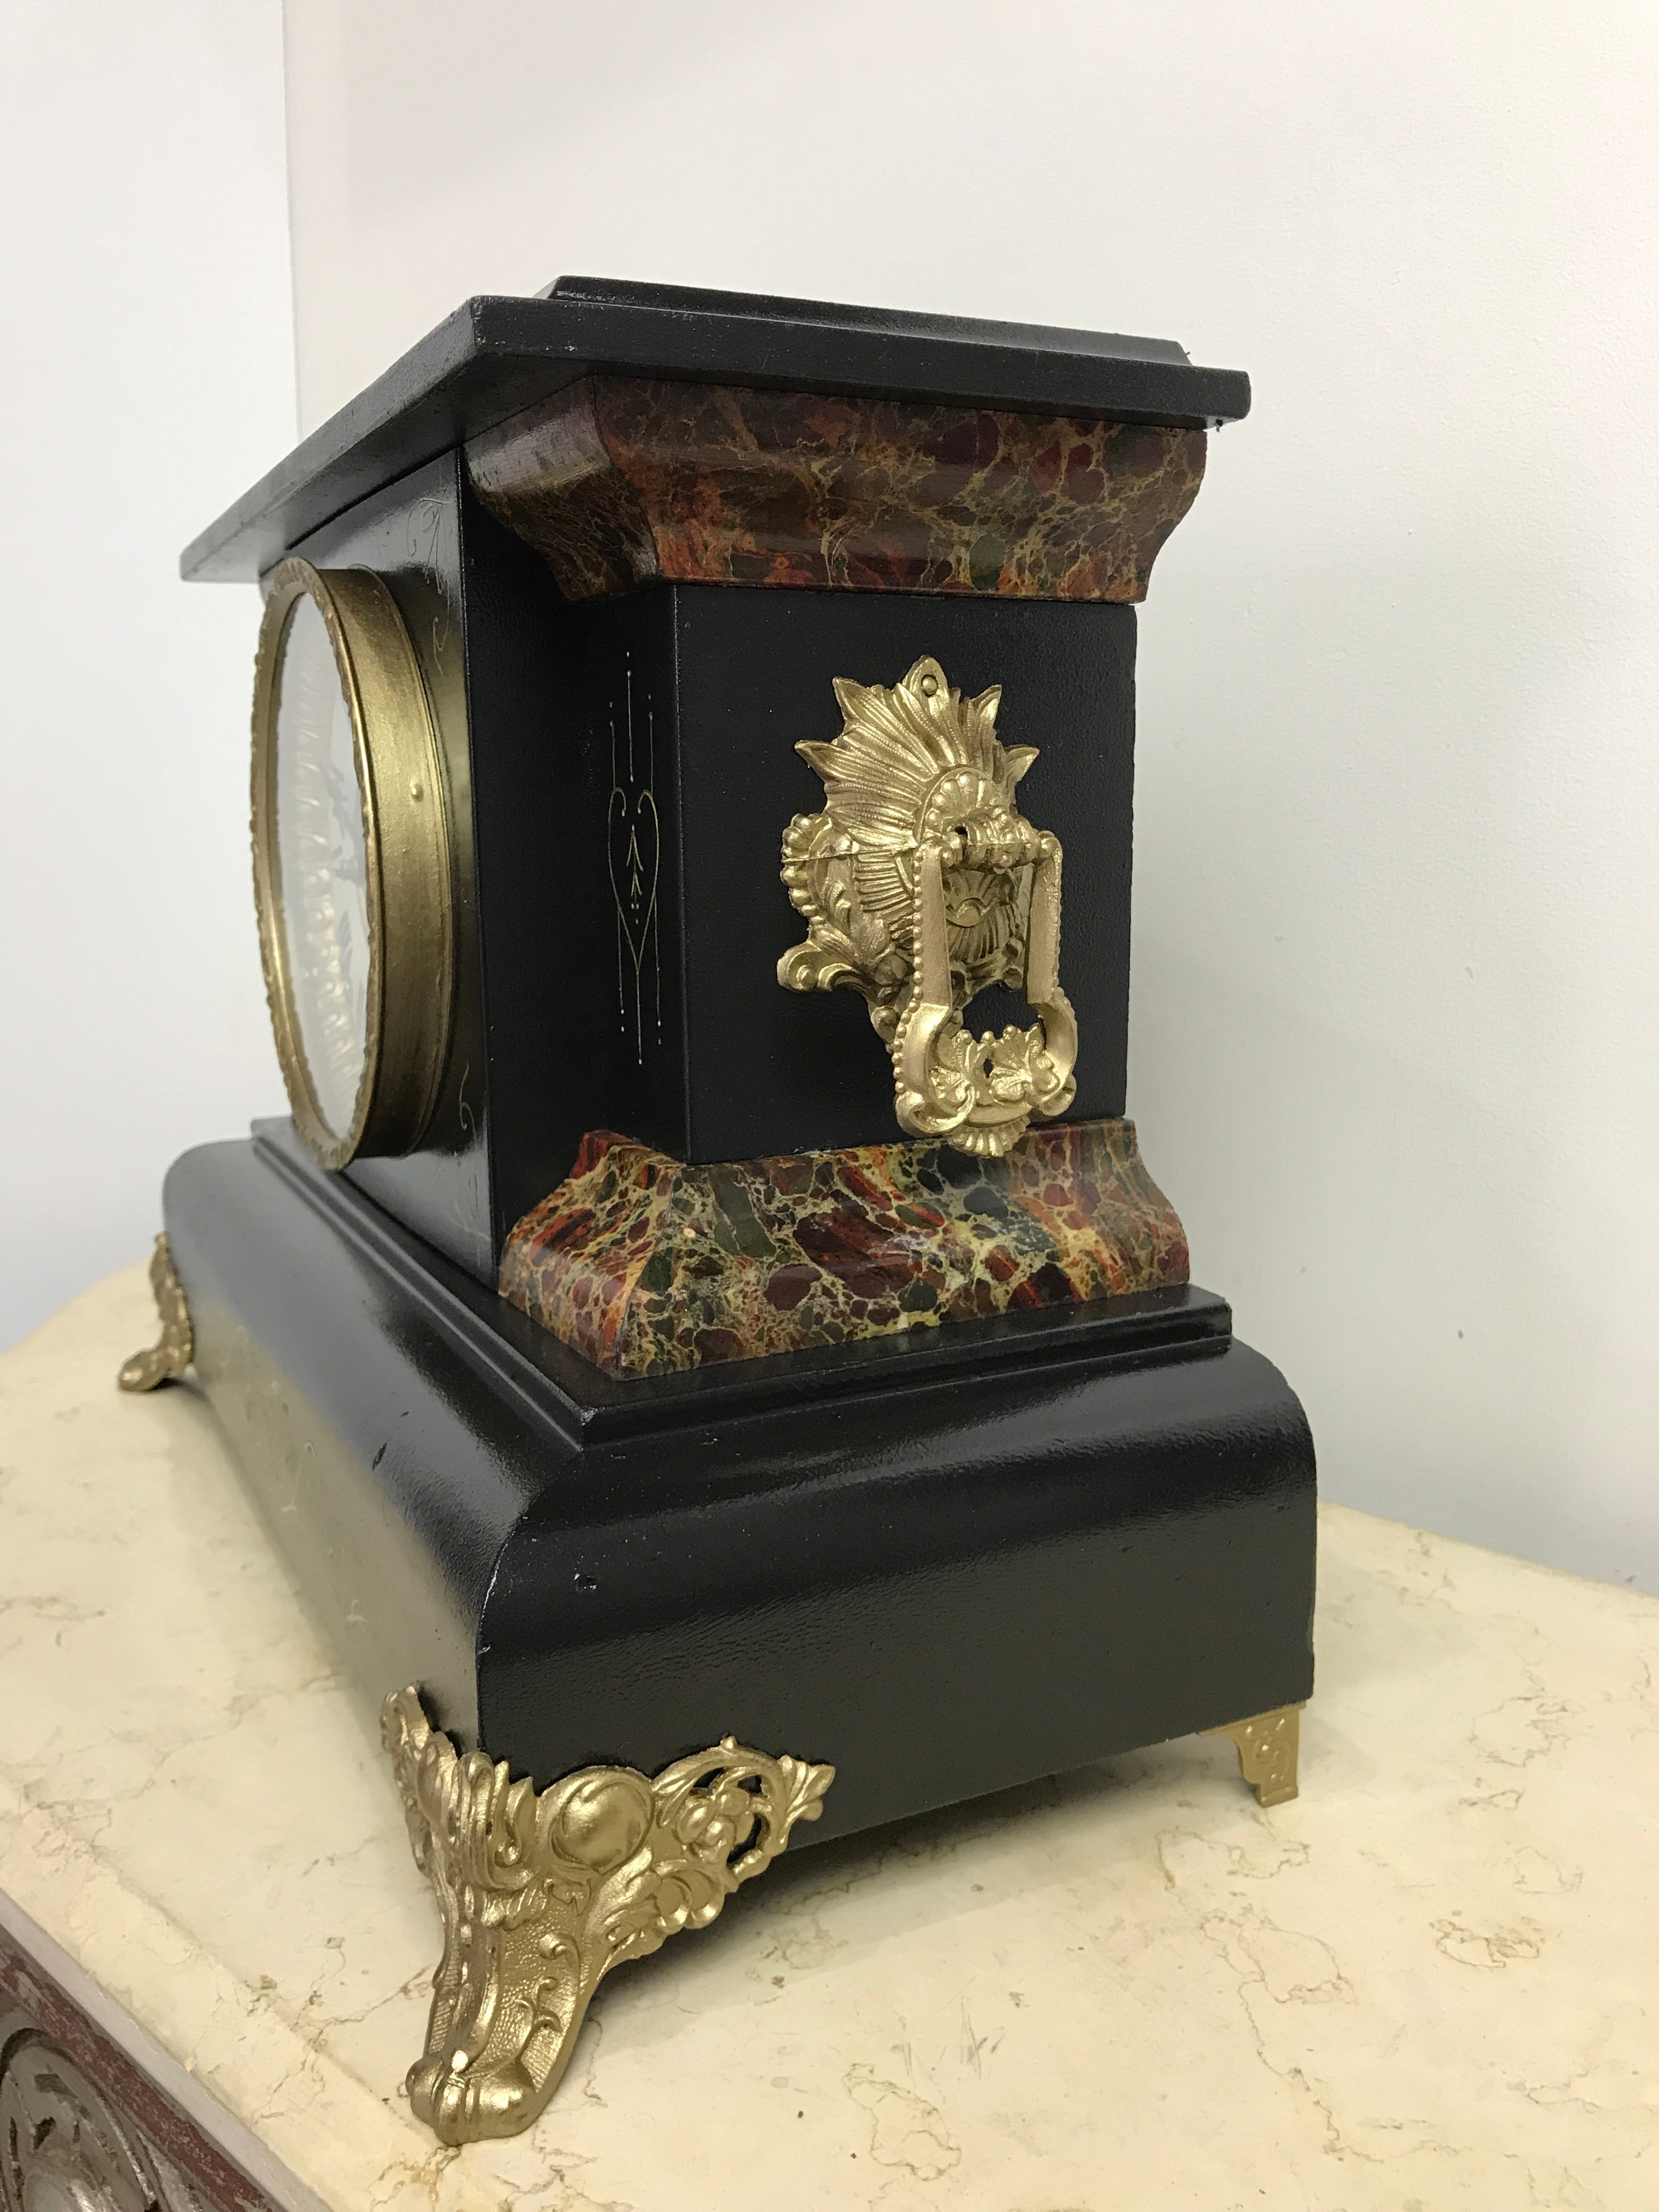 Antique Sessions Chime Mantel Clock | eXibit collection